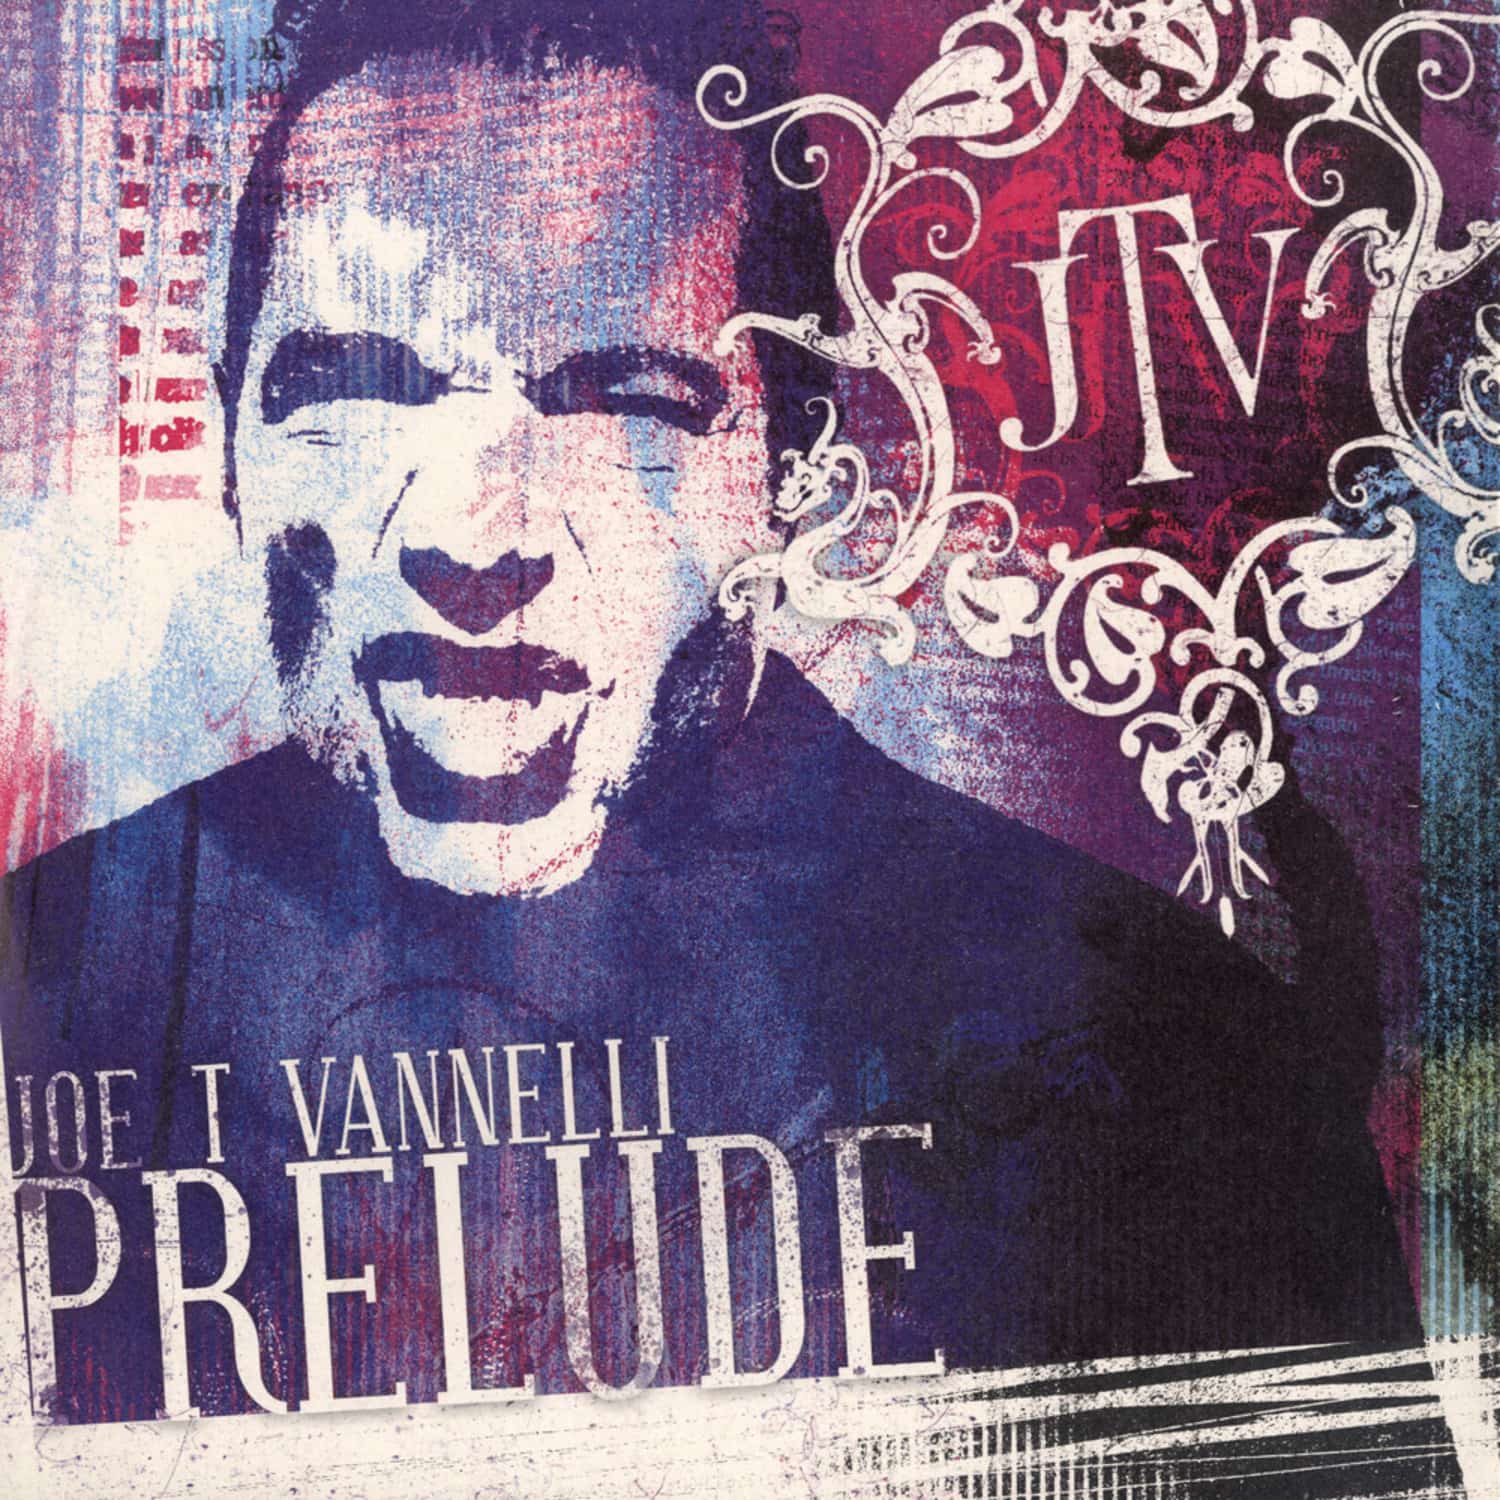 Joe T. Vannelli - PRELUDE EP